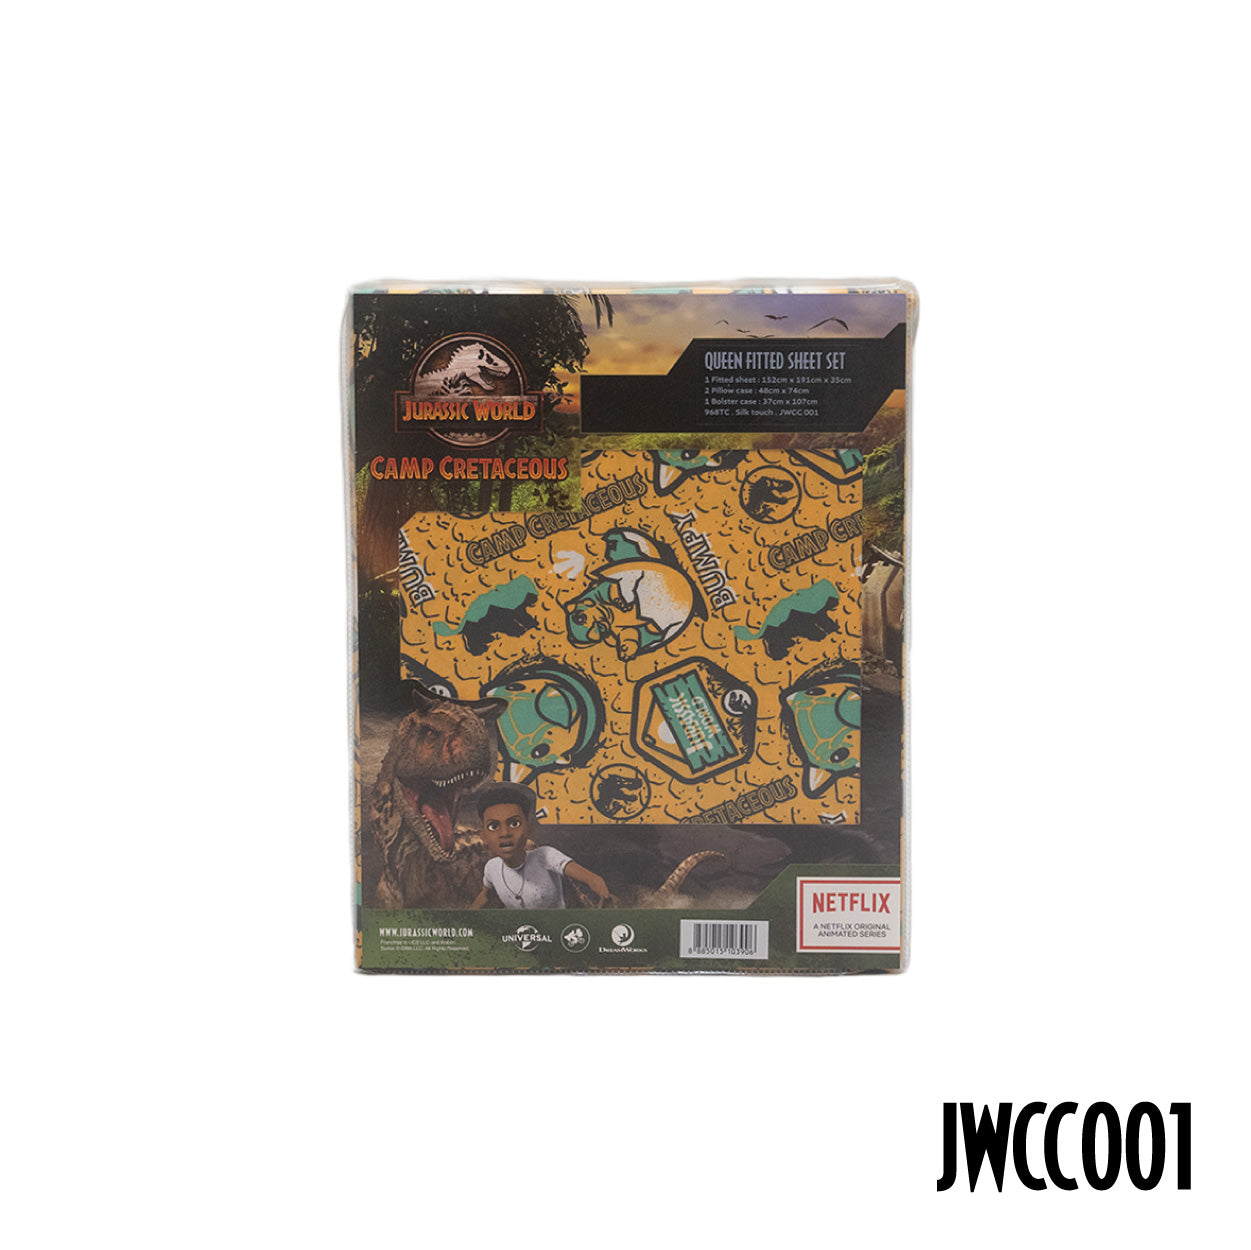 
                  
                    Jurassic World Series Fitted Sheet Set JWCC001
                  
                